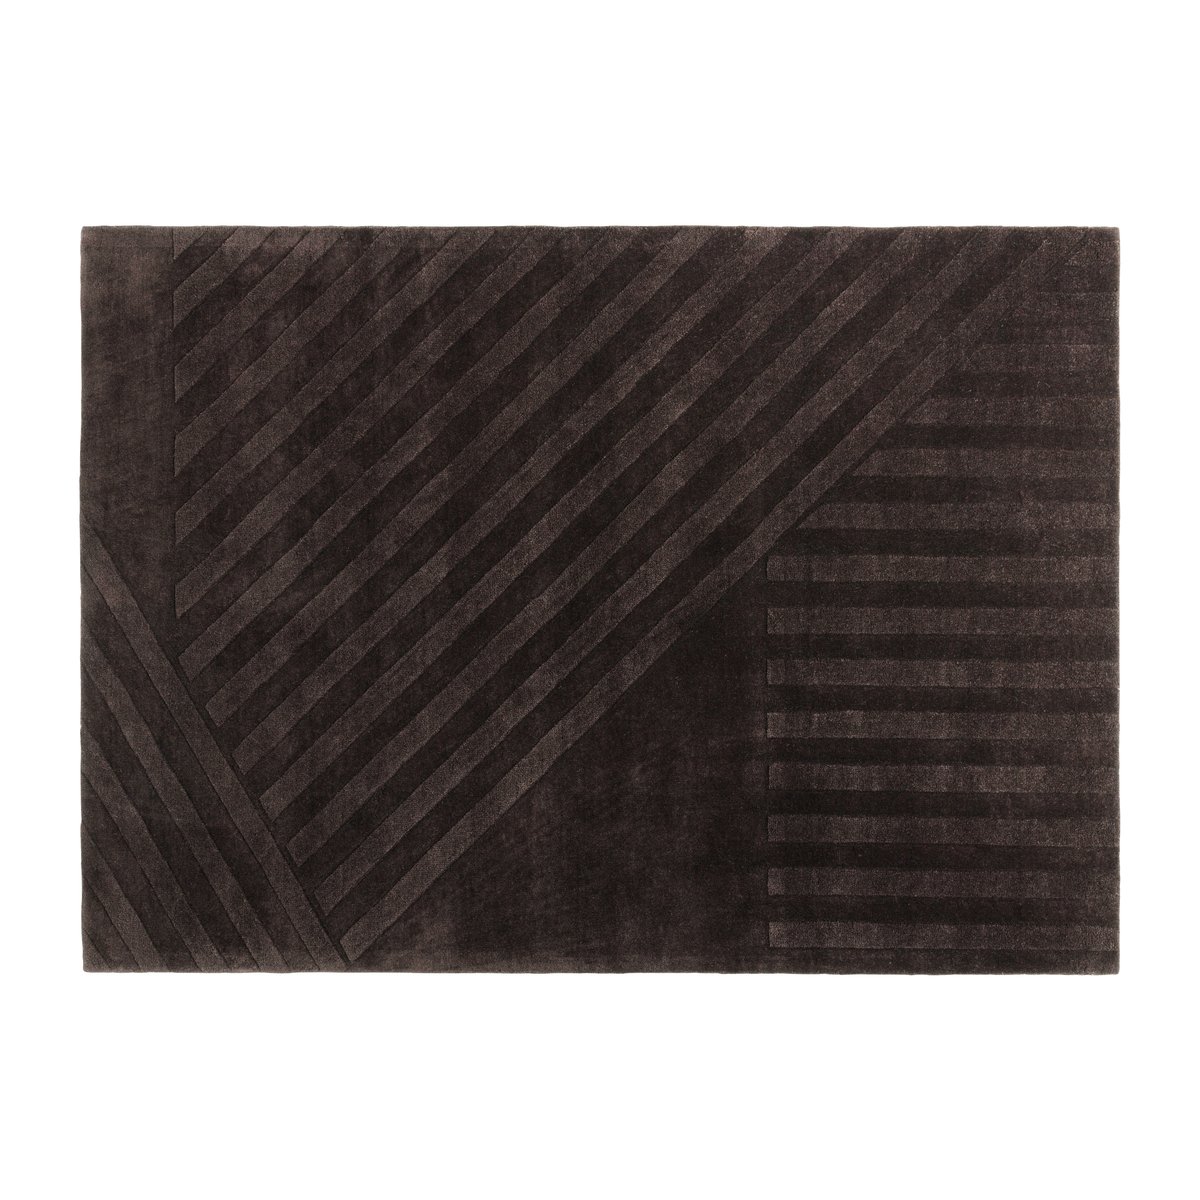 NJRD Levels wollen vloerkleed stripes bruin 170x240 cm